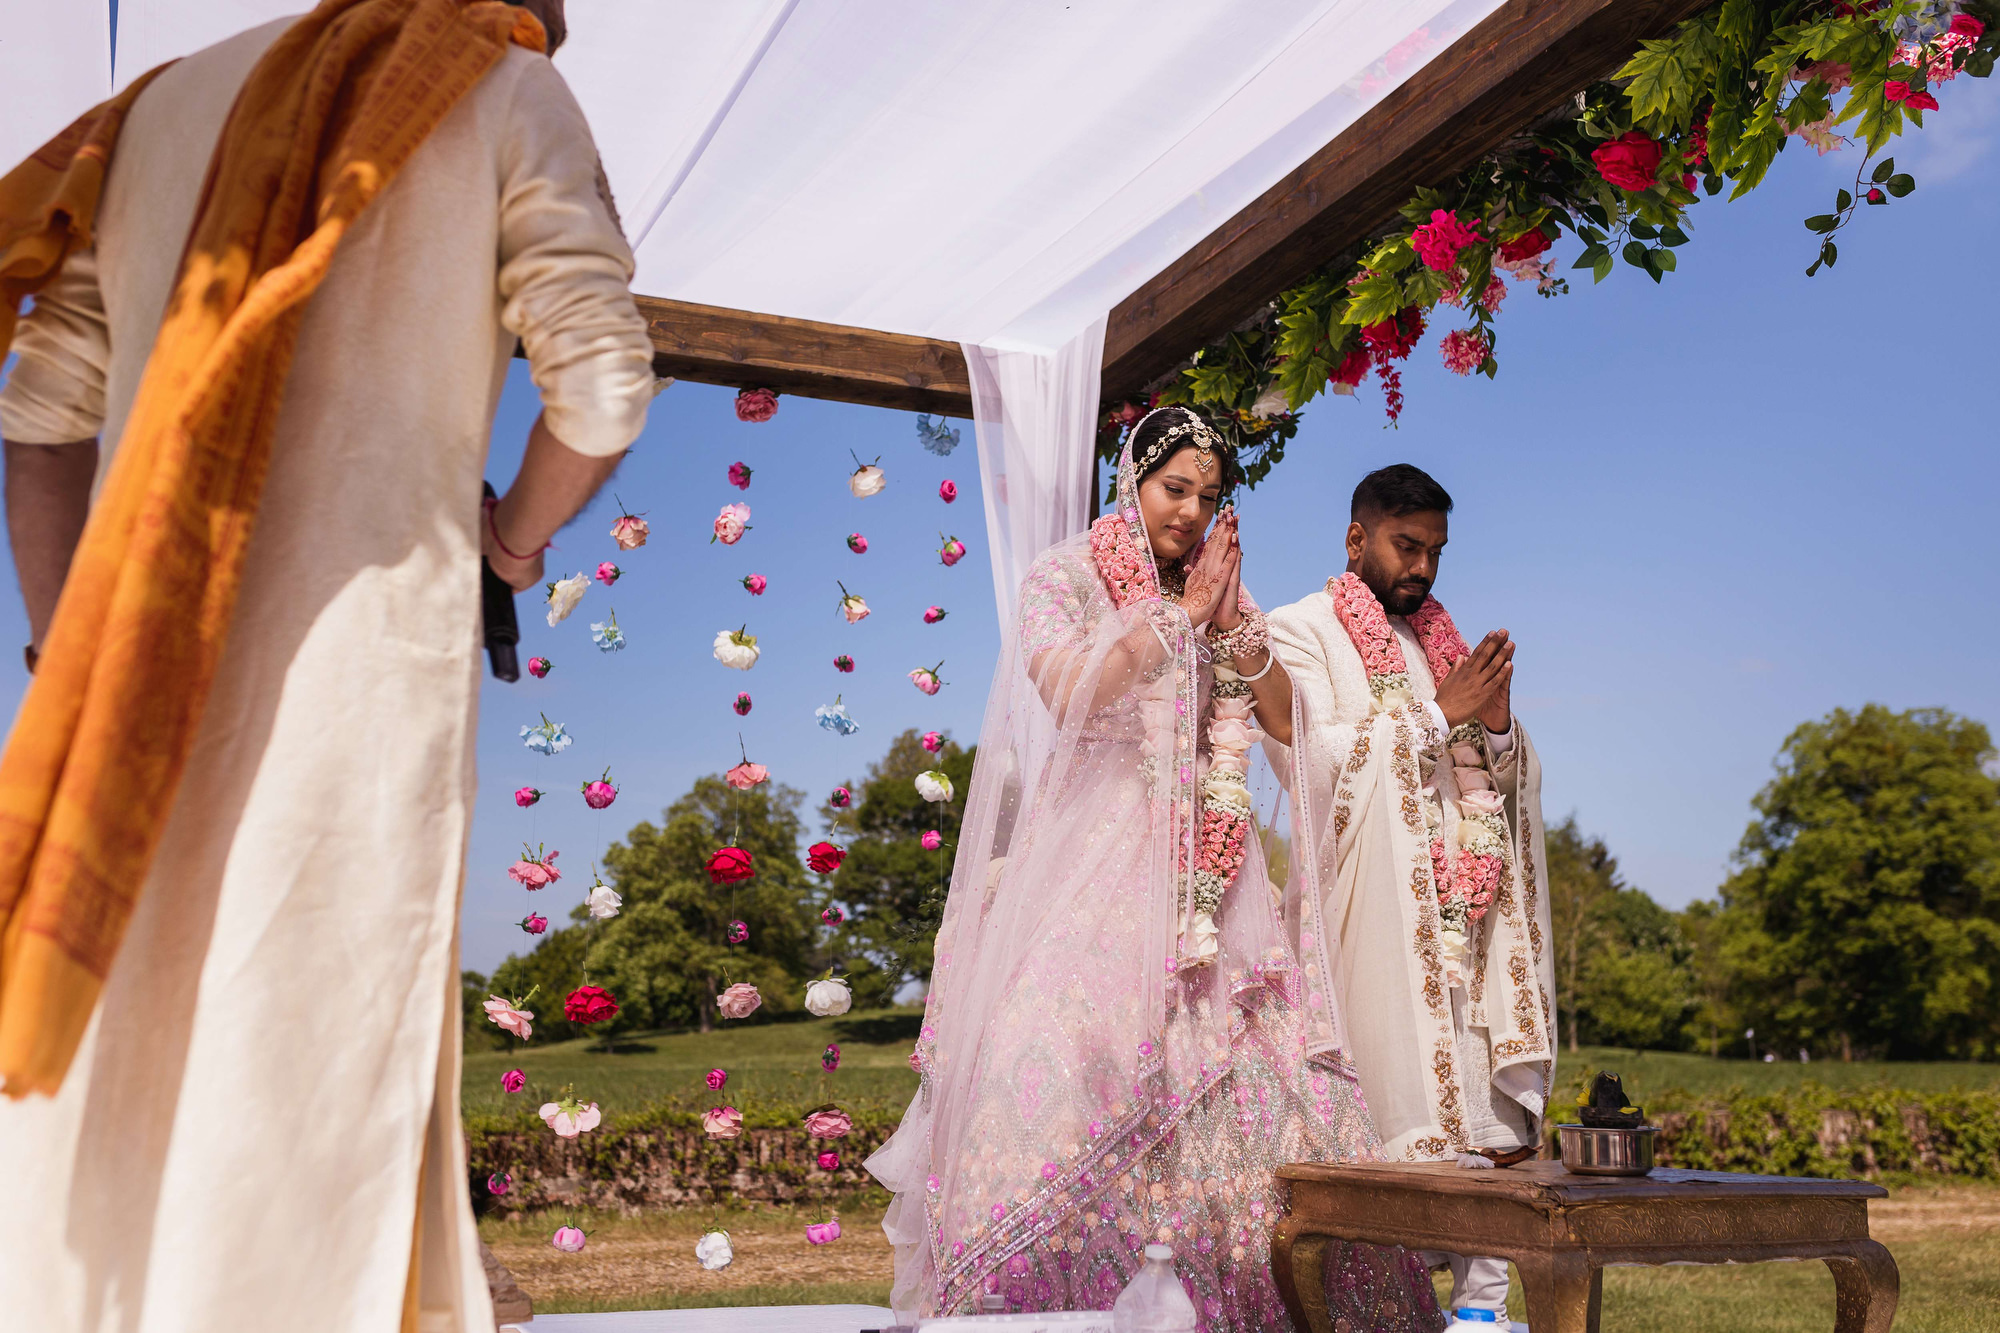 Asian Wedding Photographer in Essex, Braxted Park, Outdoor Hindu Wedding Ceremony